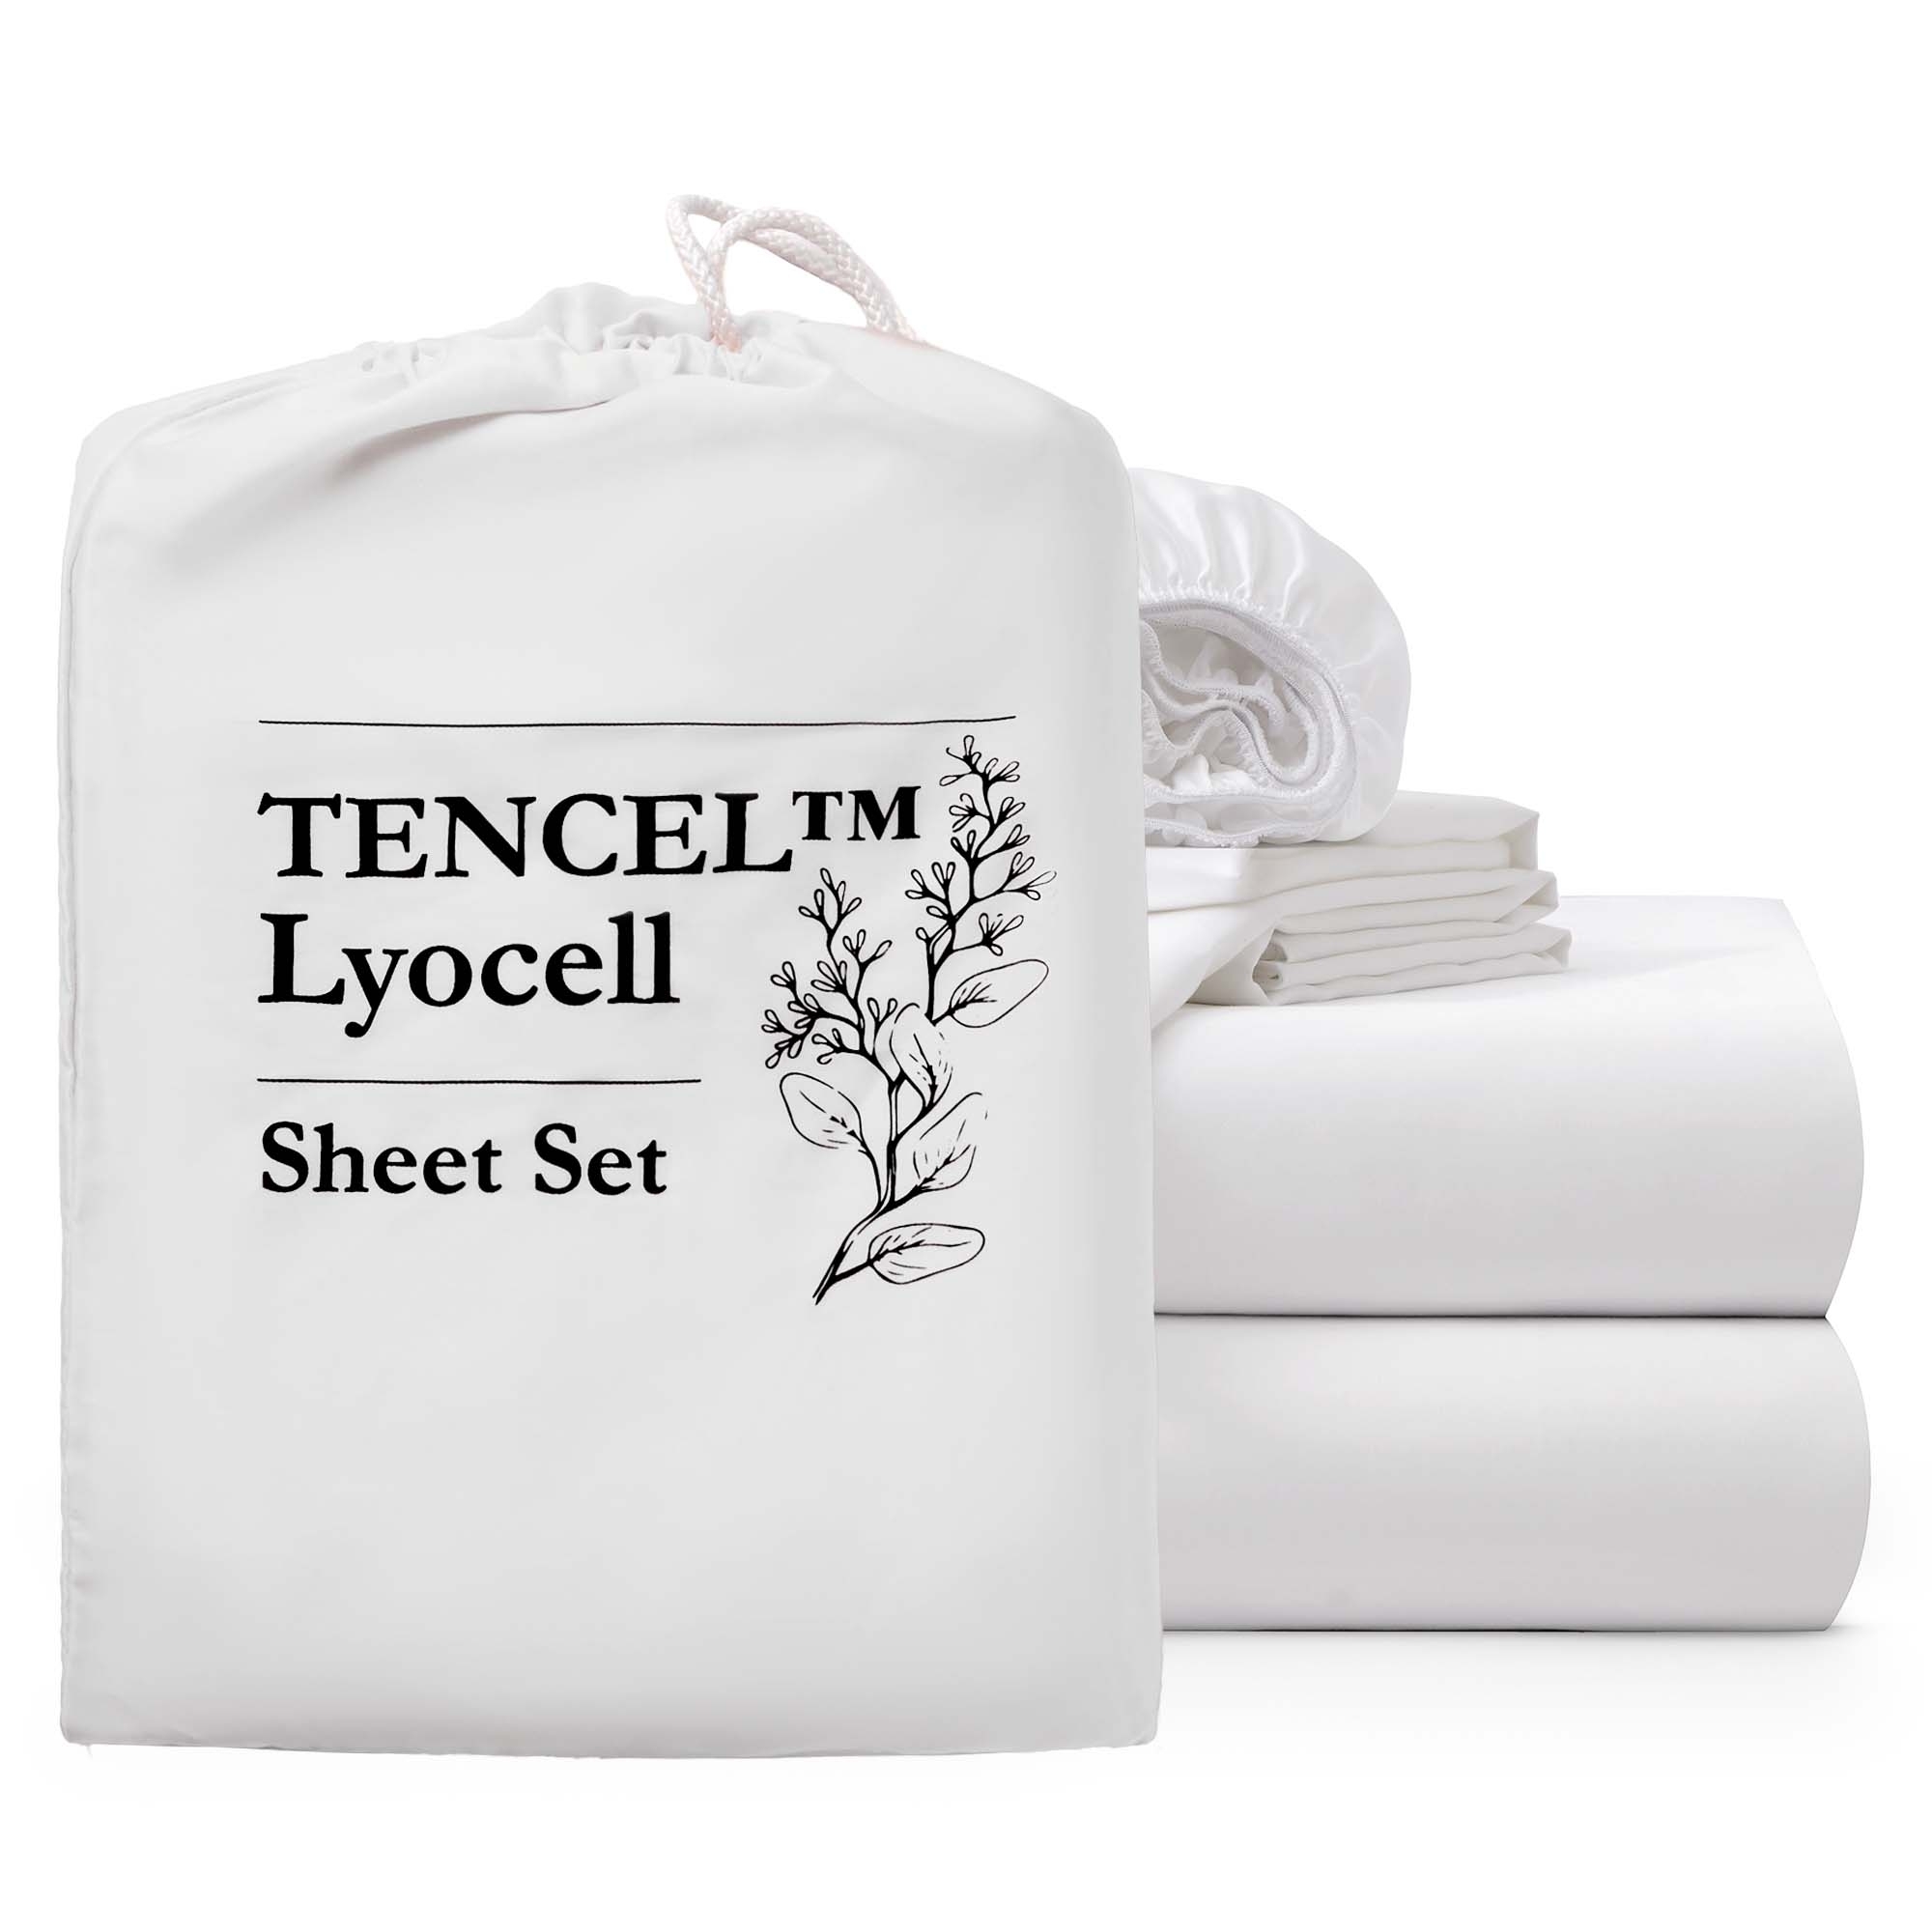 Silky Soft TENCELâ¢ Lyocell Cooling Sheet Set-Breathability And Moisture-wicking Bedding Set - Quiet Grey, Full